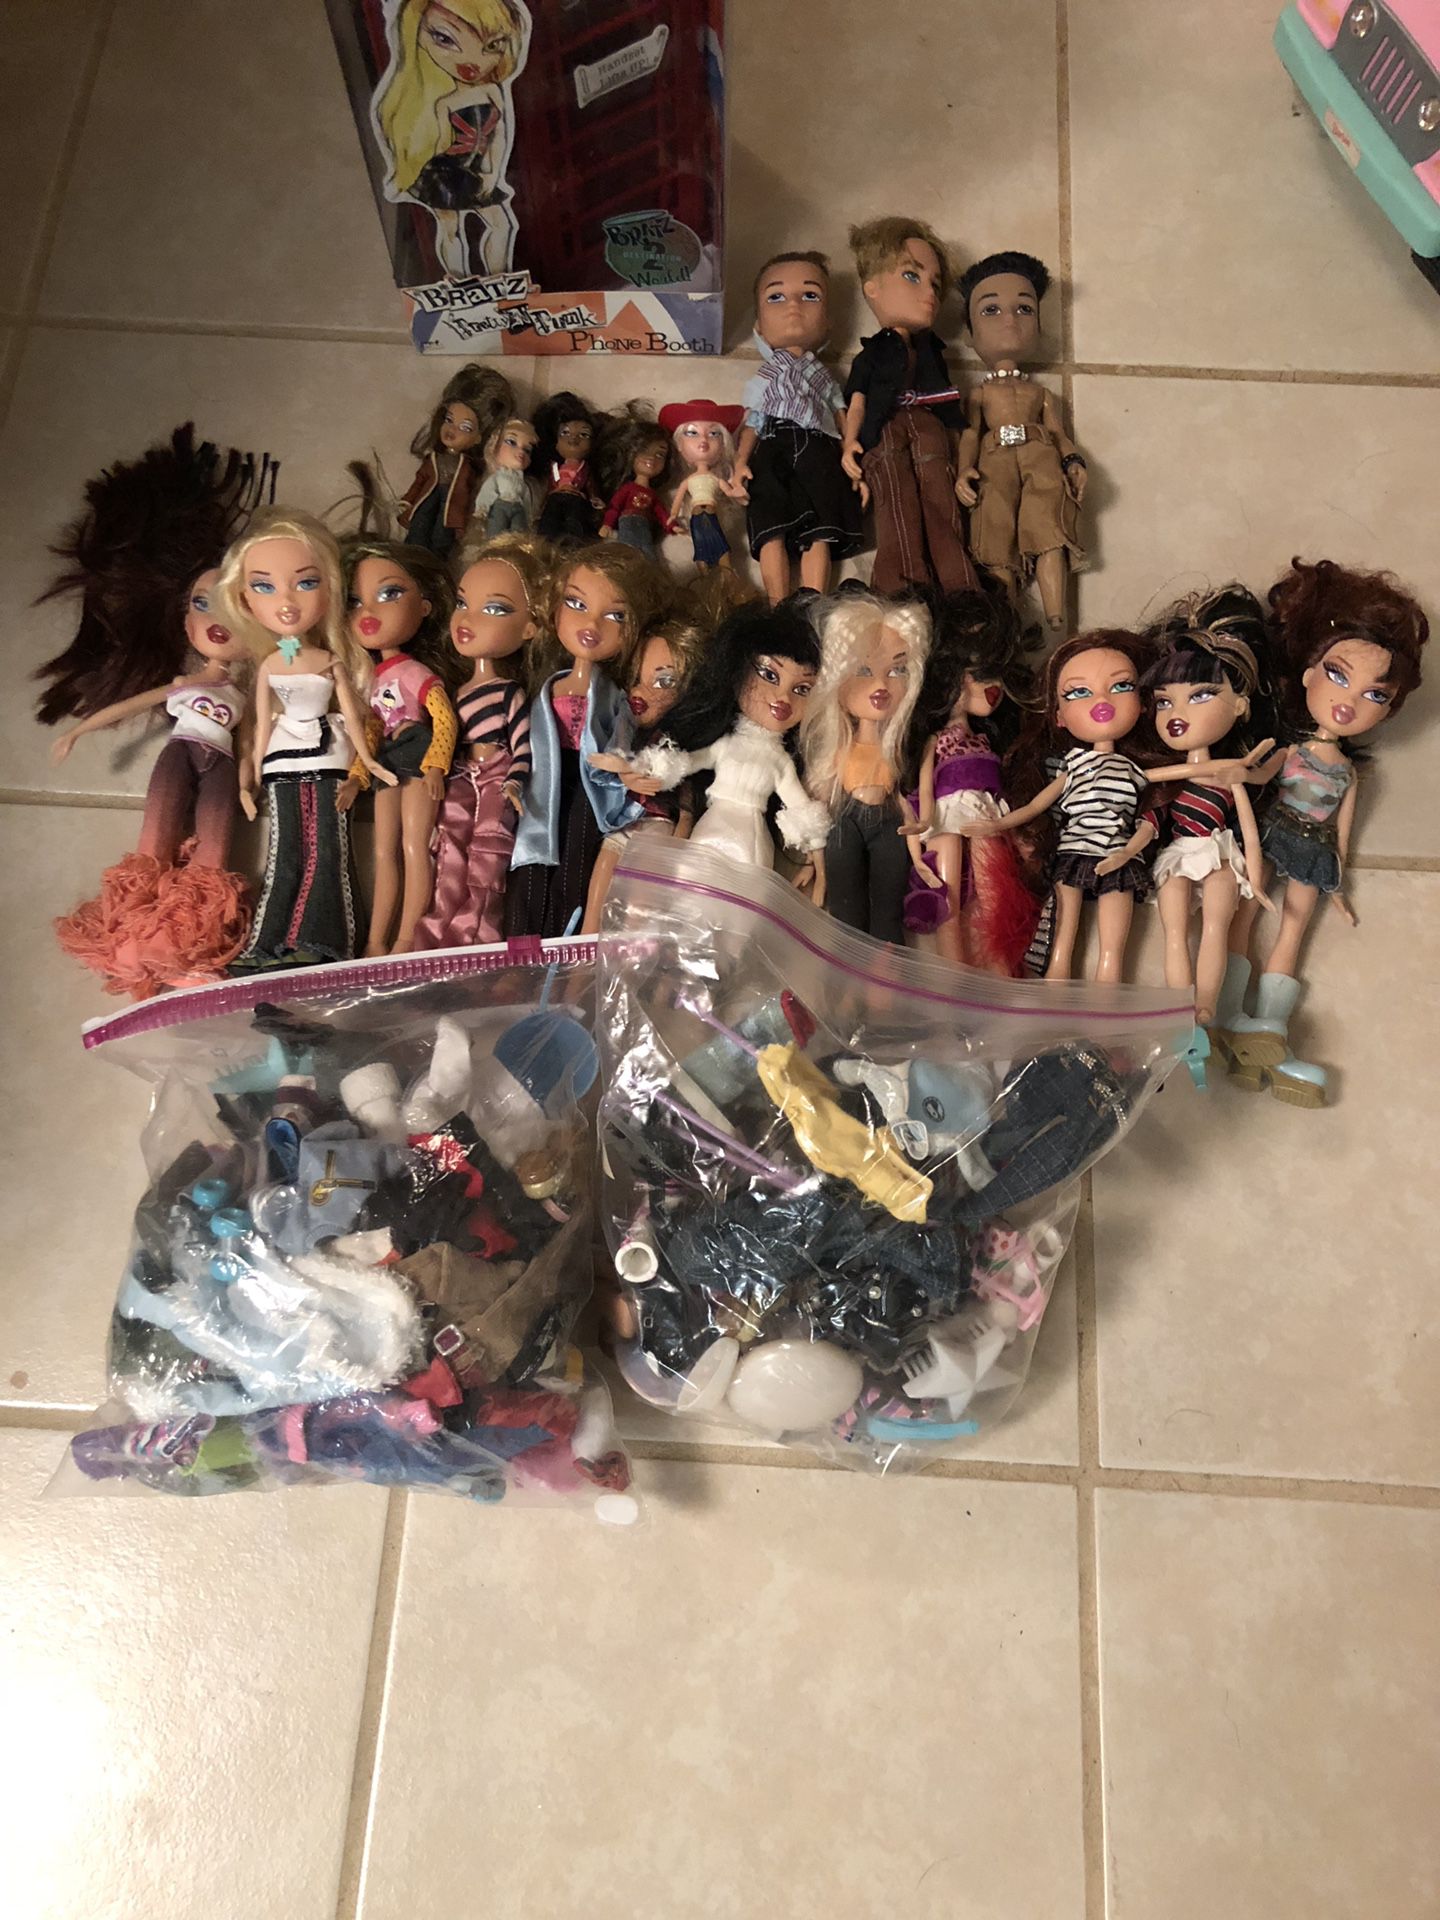 Bratz dolls, clothes, accessories